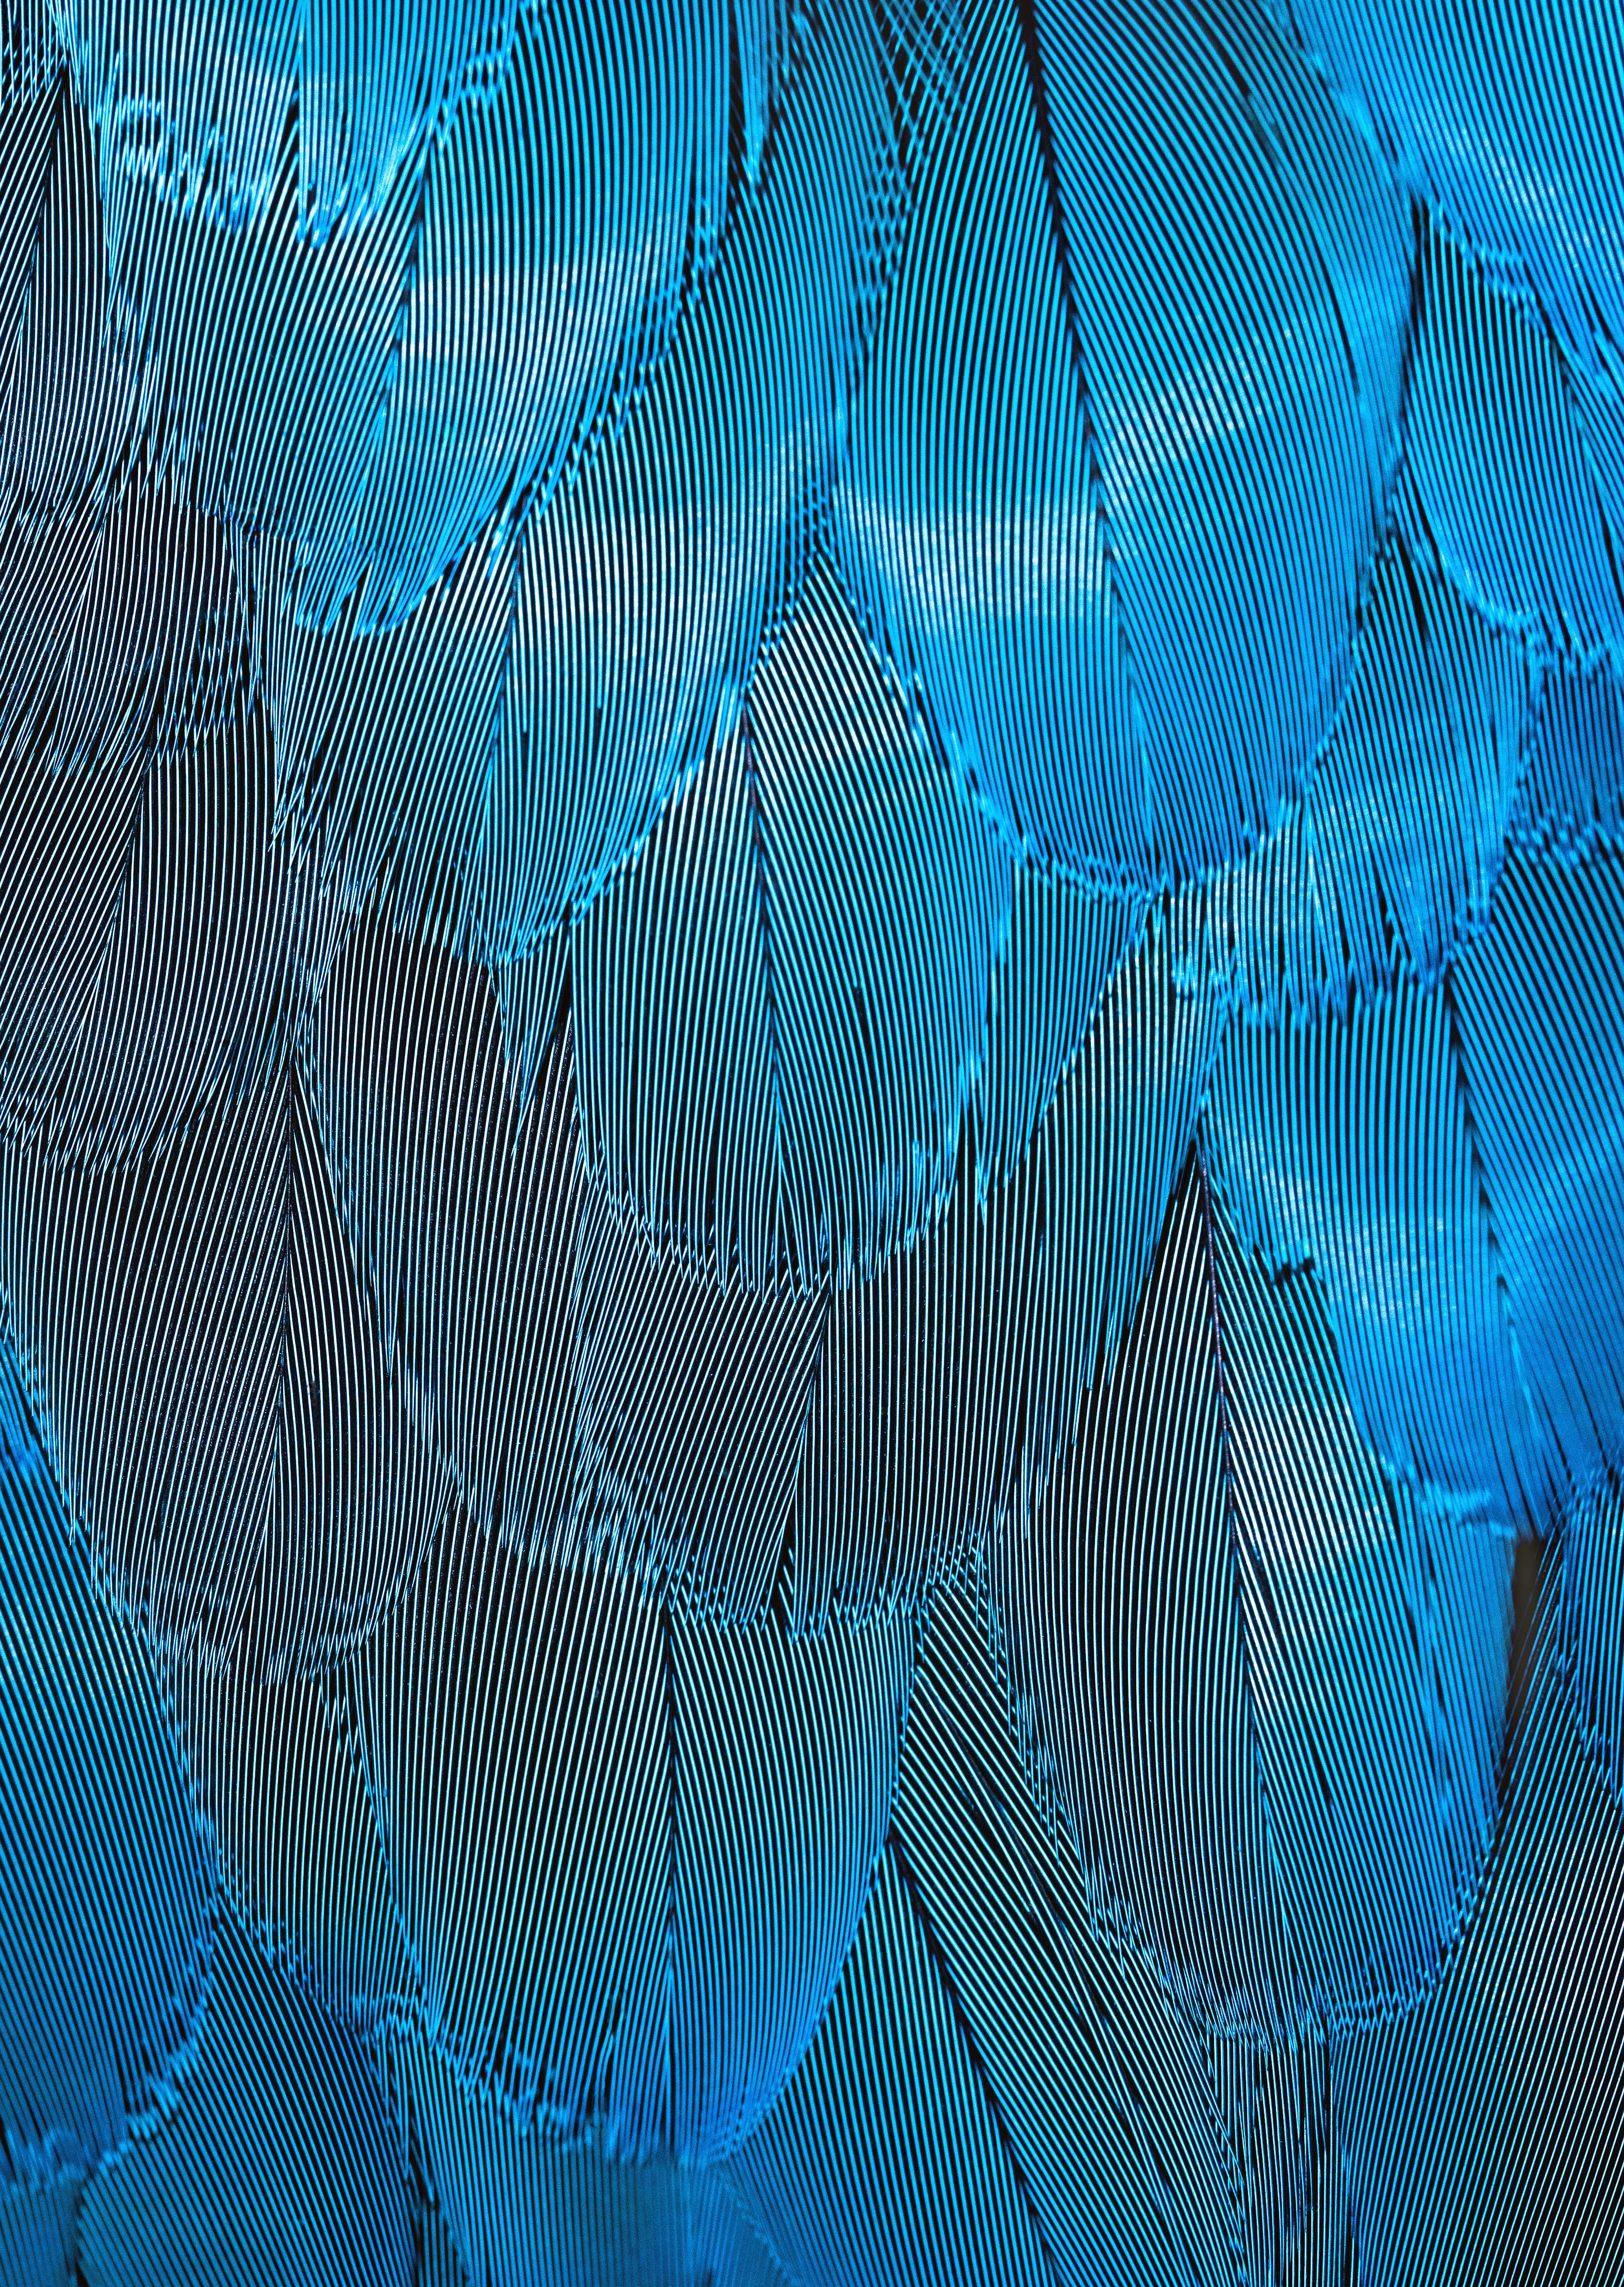 macro, feather, textures, blue, texture, iridescent phone wallpaper